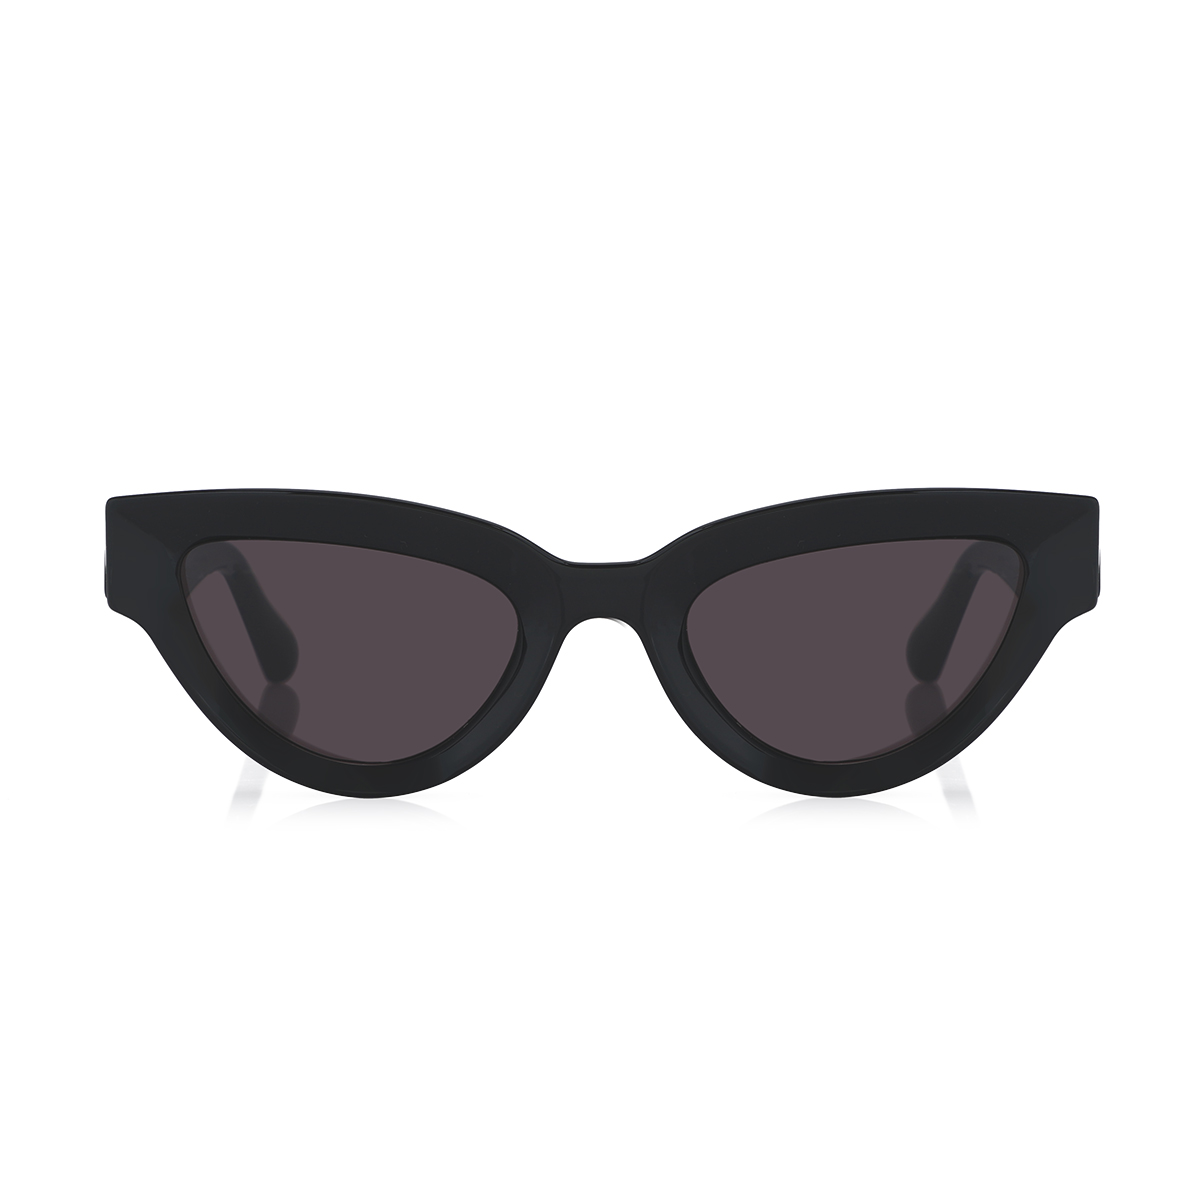 Buy Cateye Grey & Shiny Black Sunglasses Online in United Arab Emirates ...